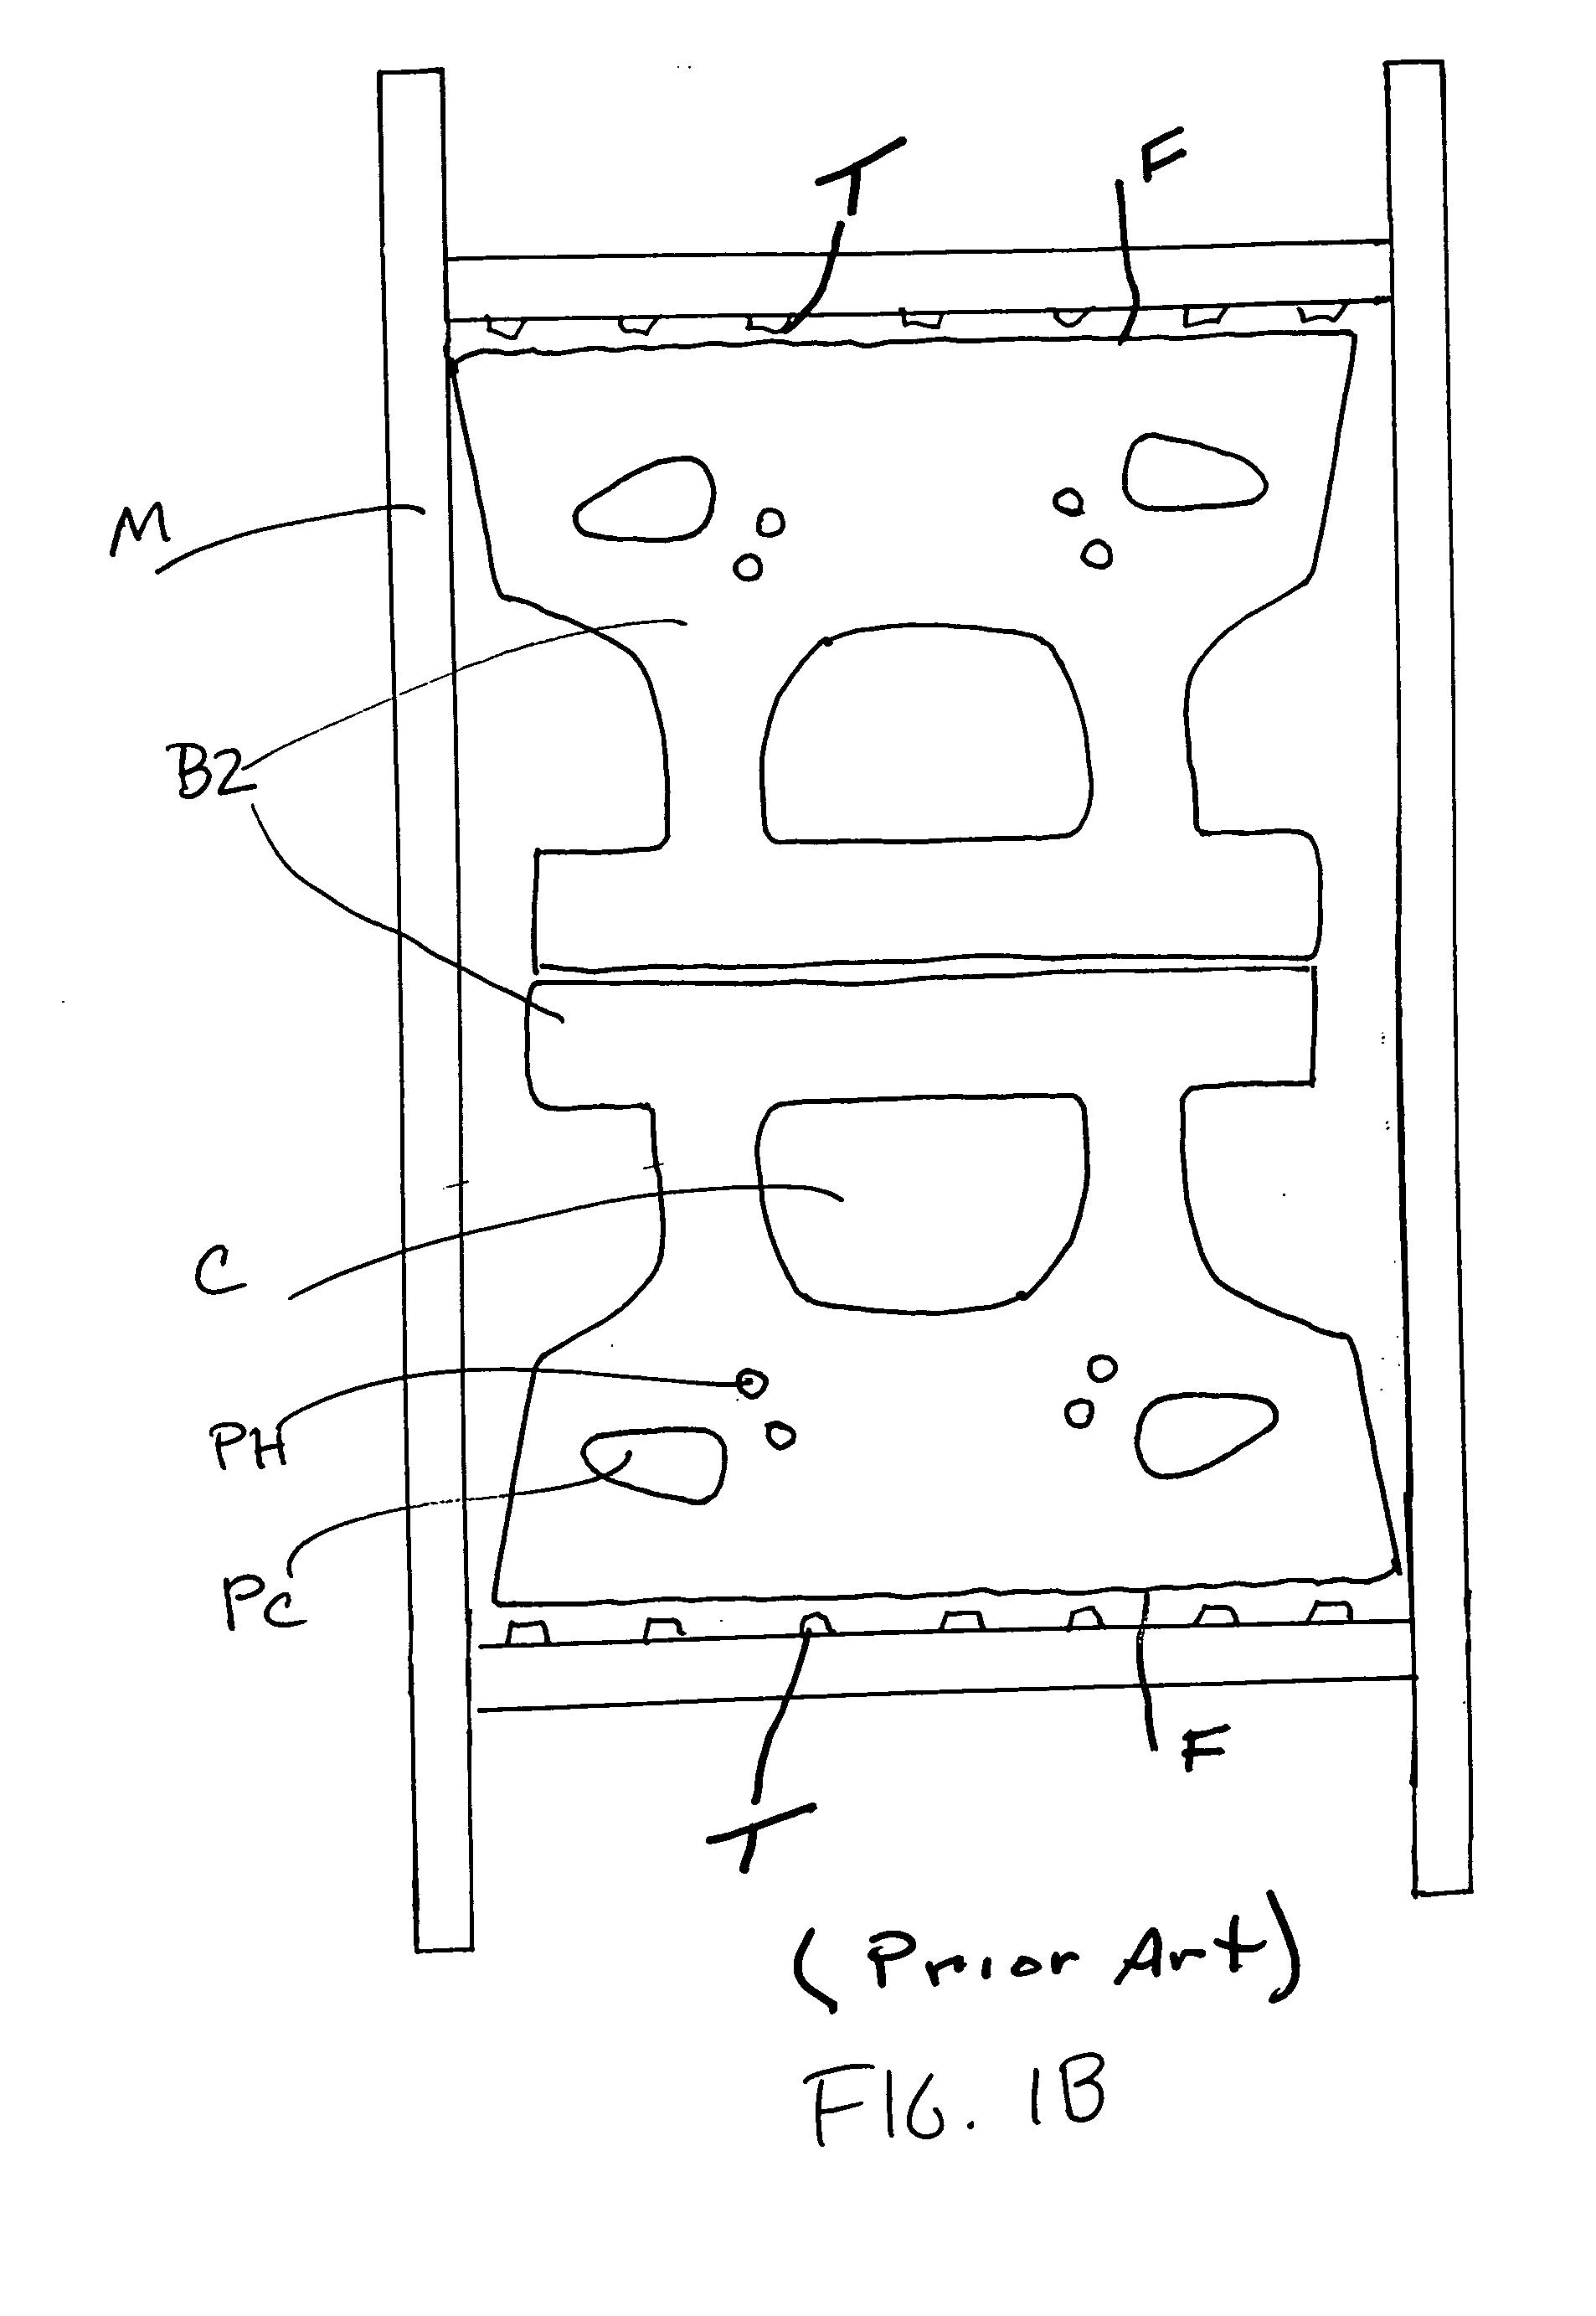 Method of making wall block